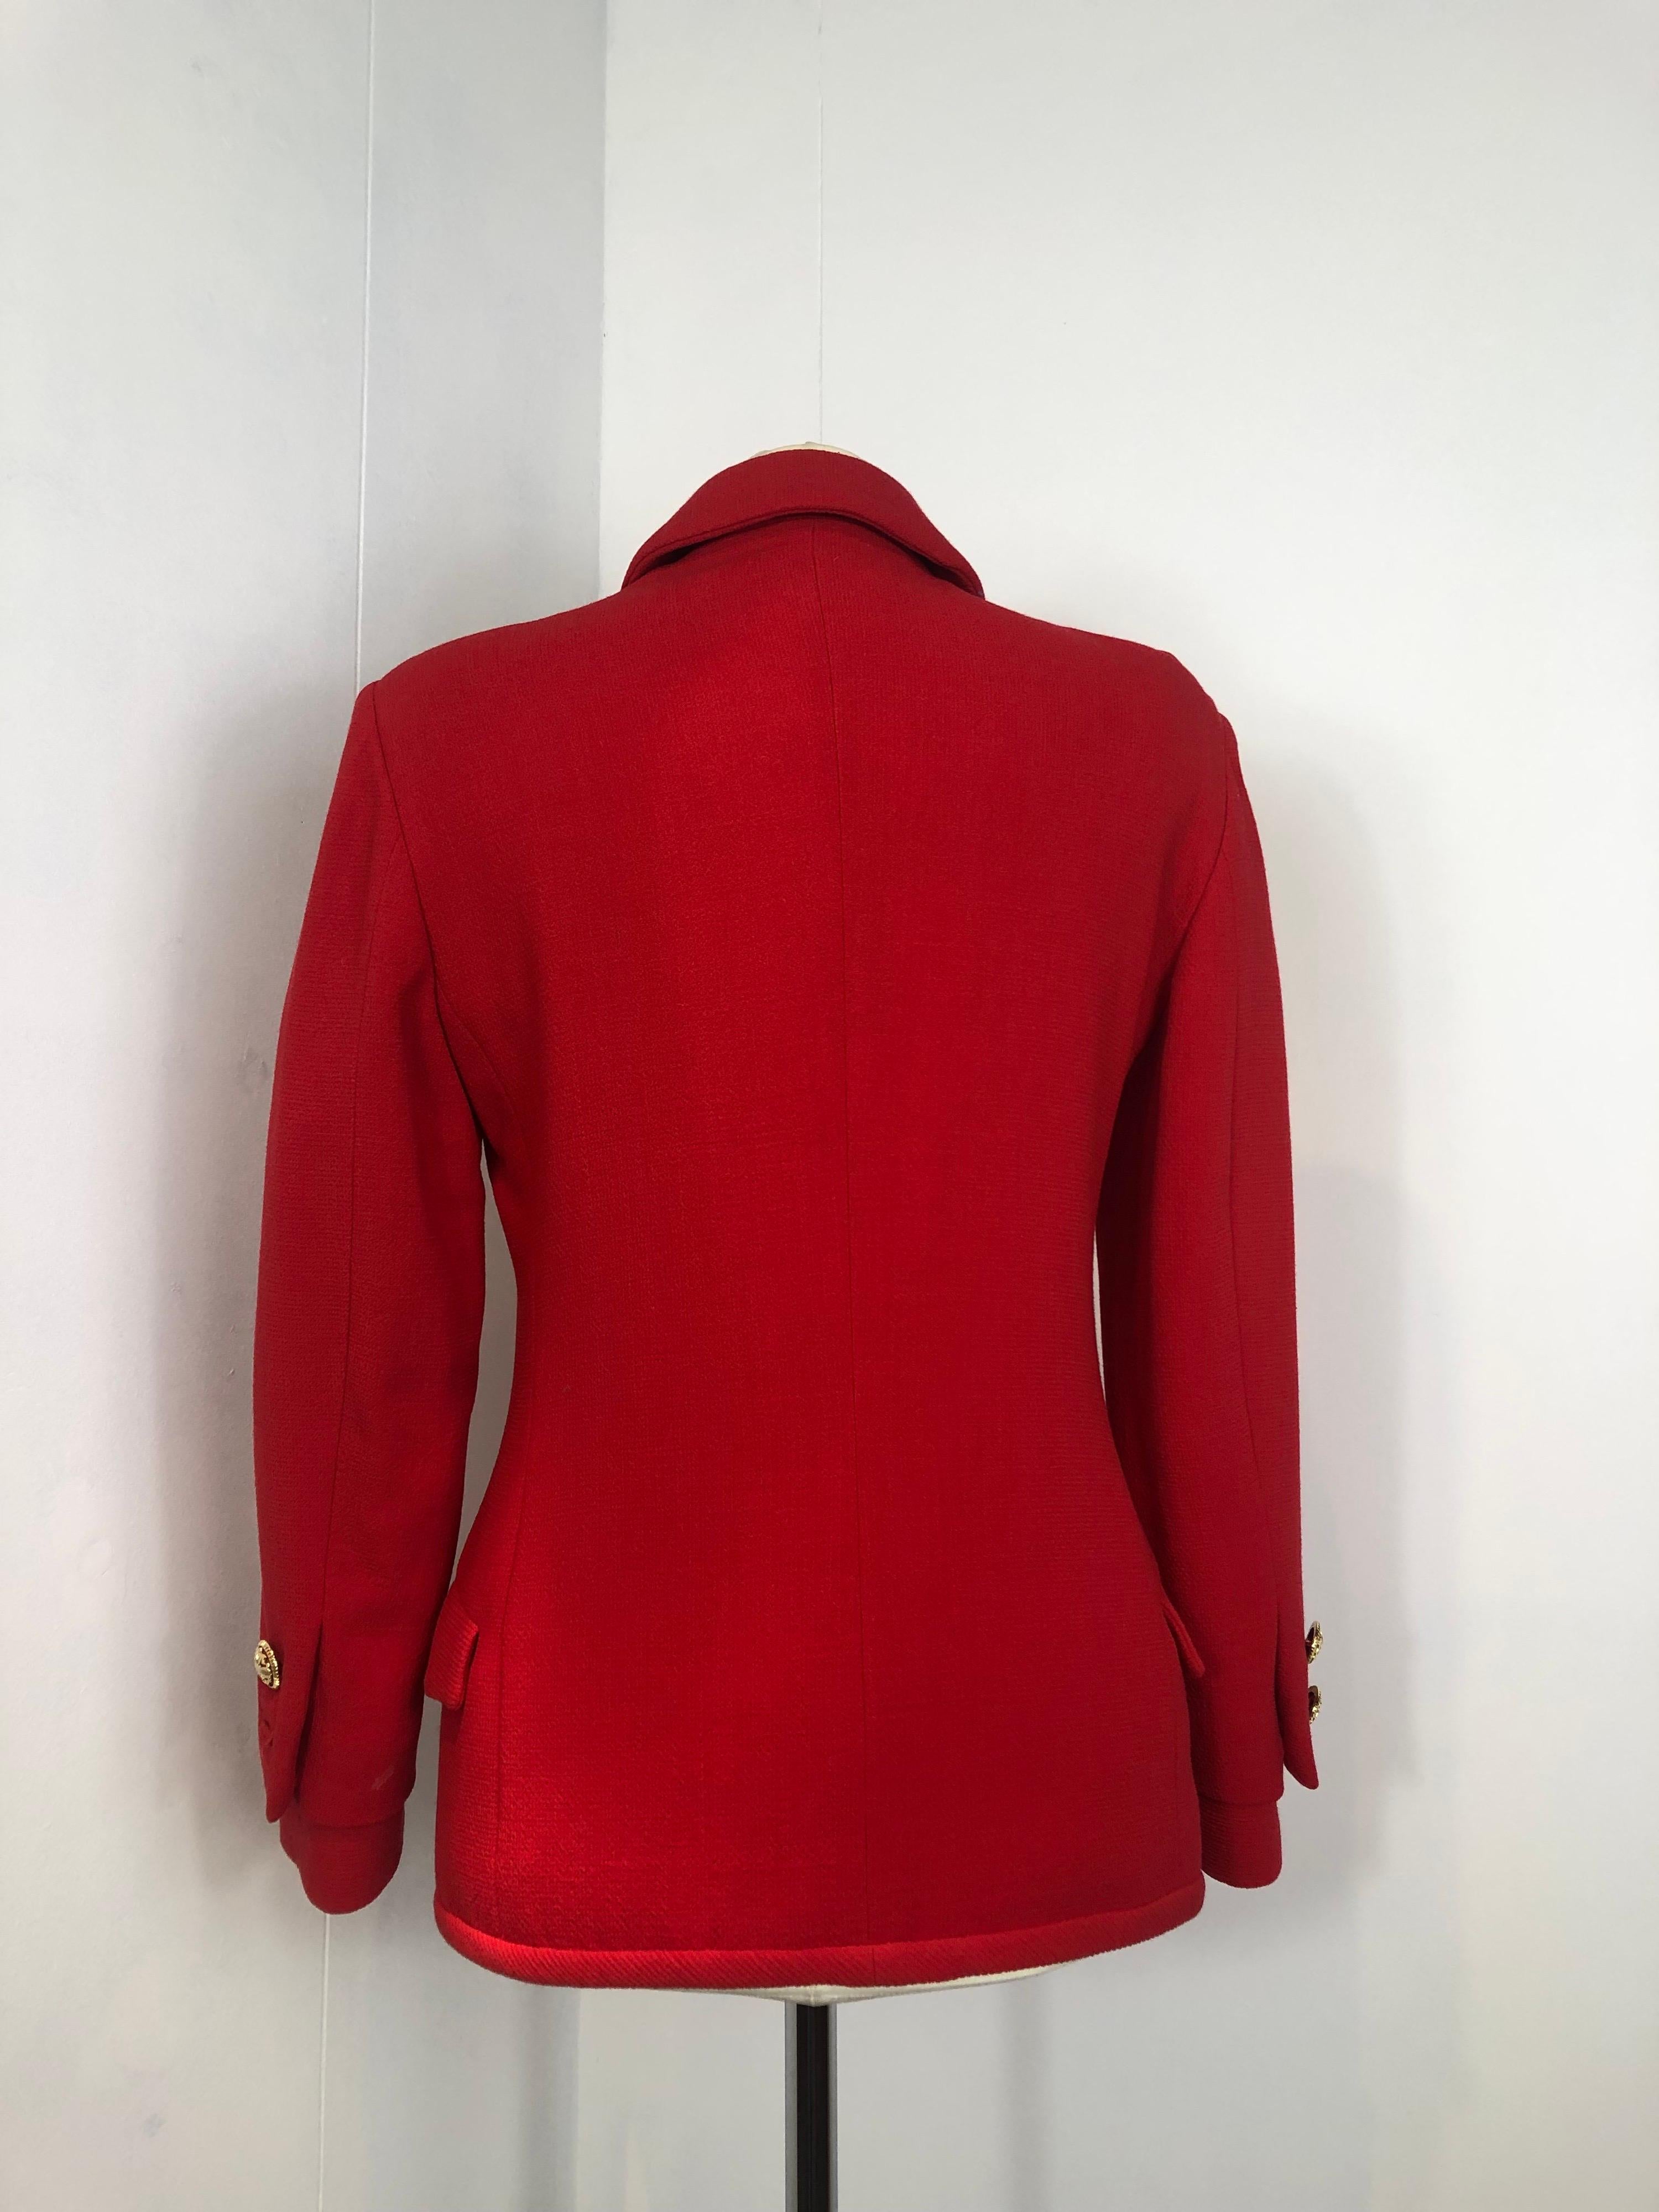 versace red jacket